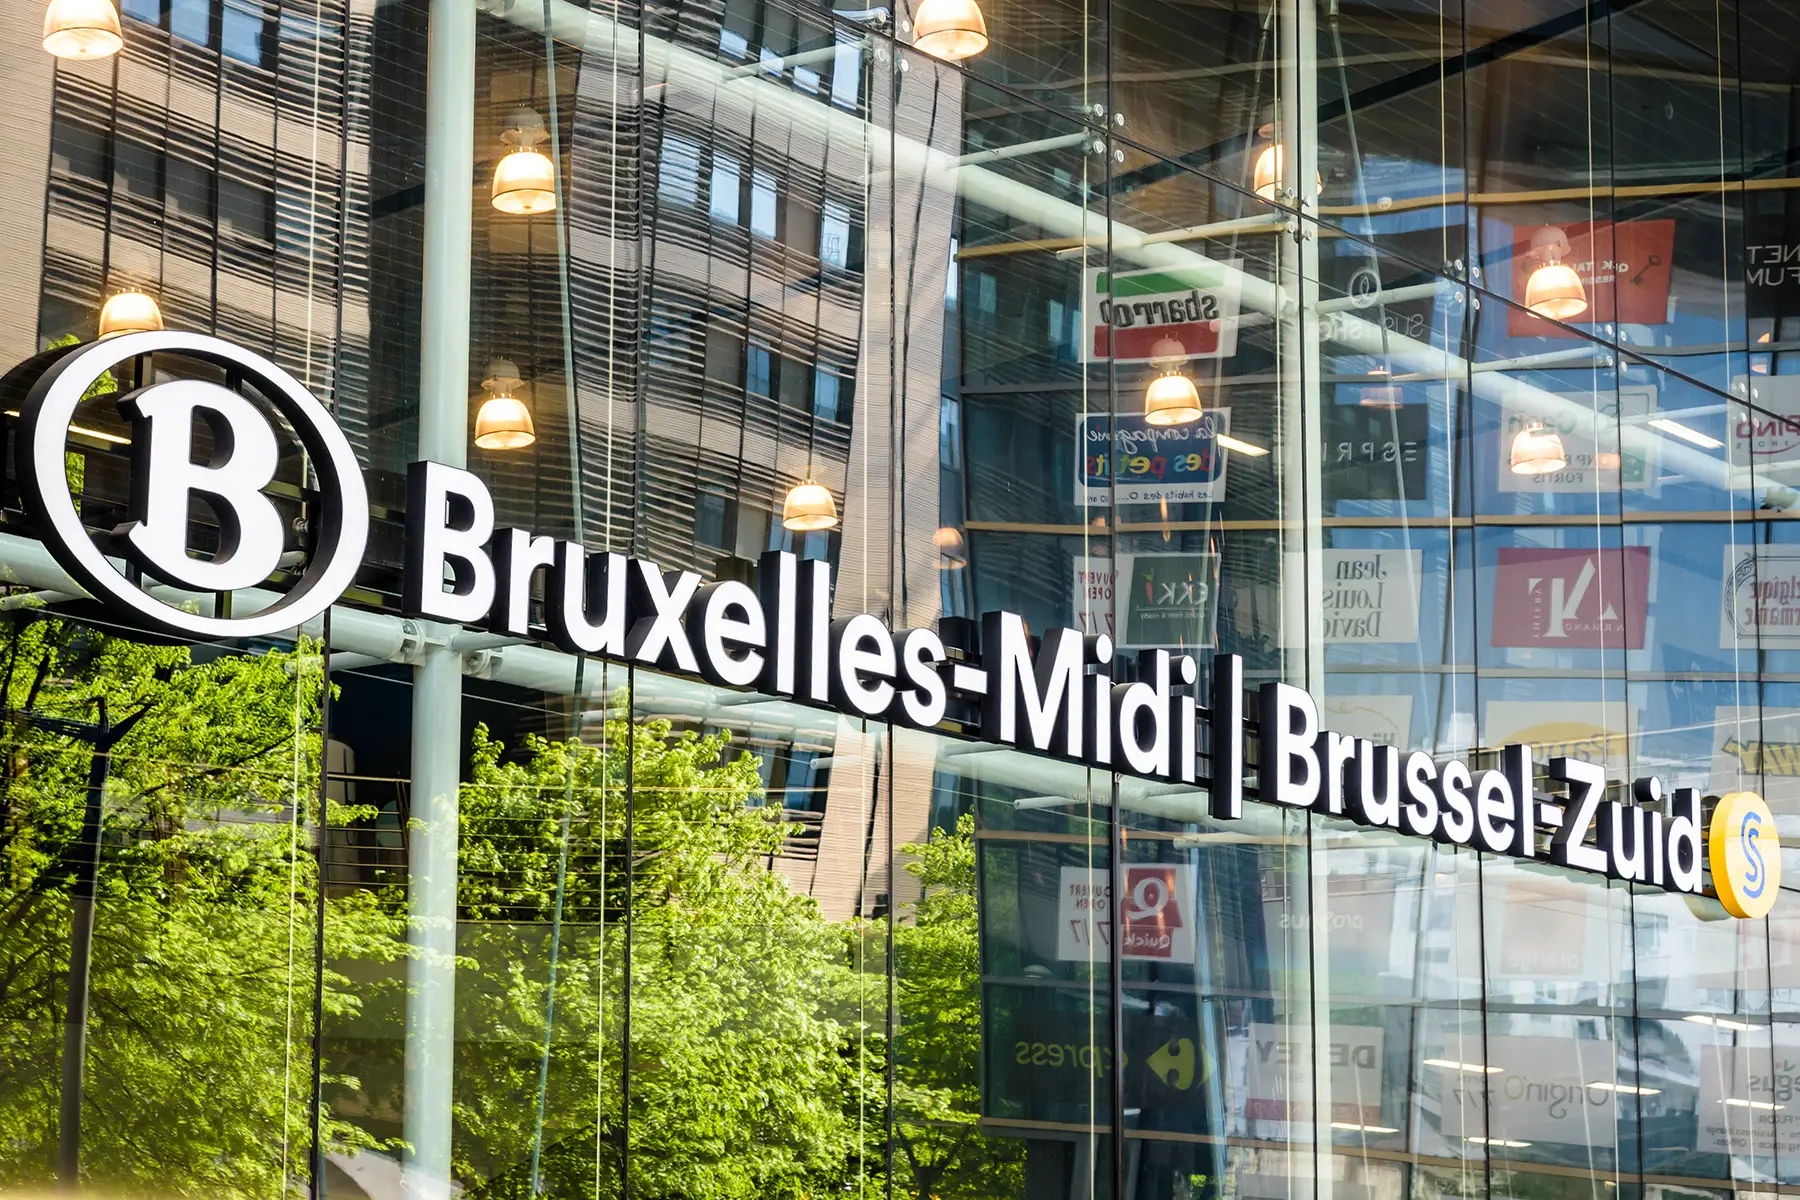 Bilingual train station sign in Brussels, Belgium